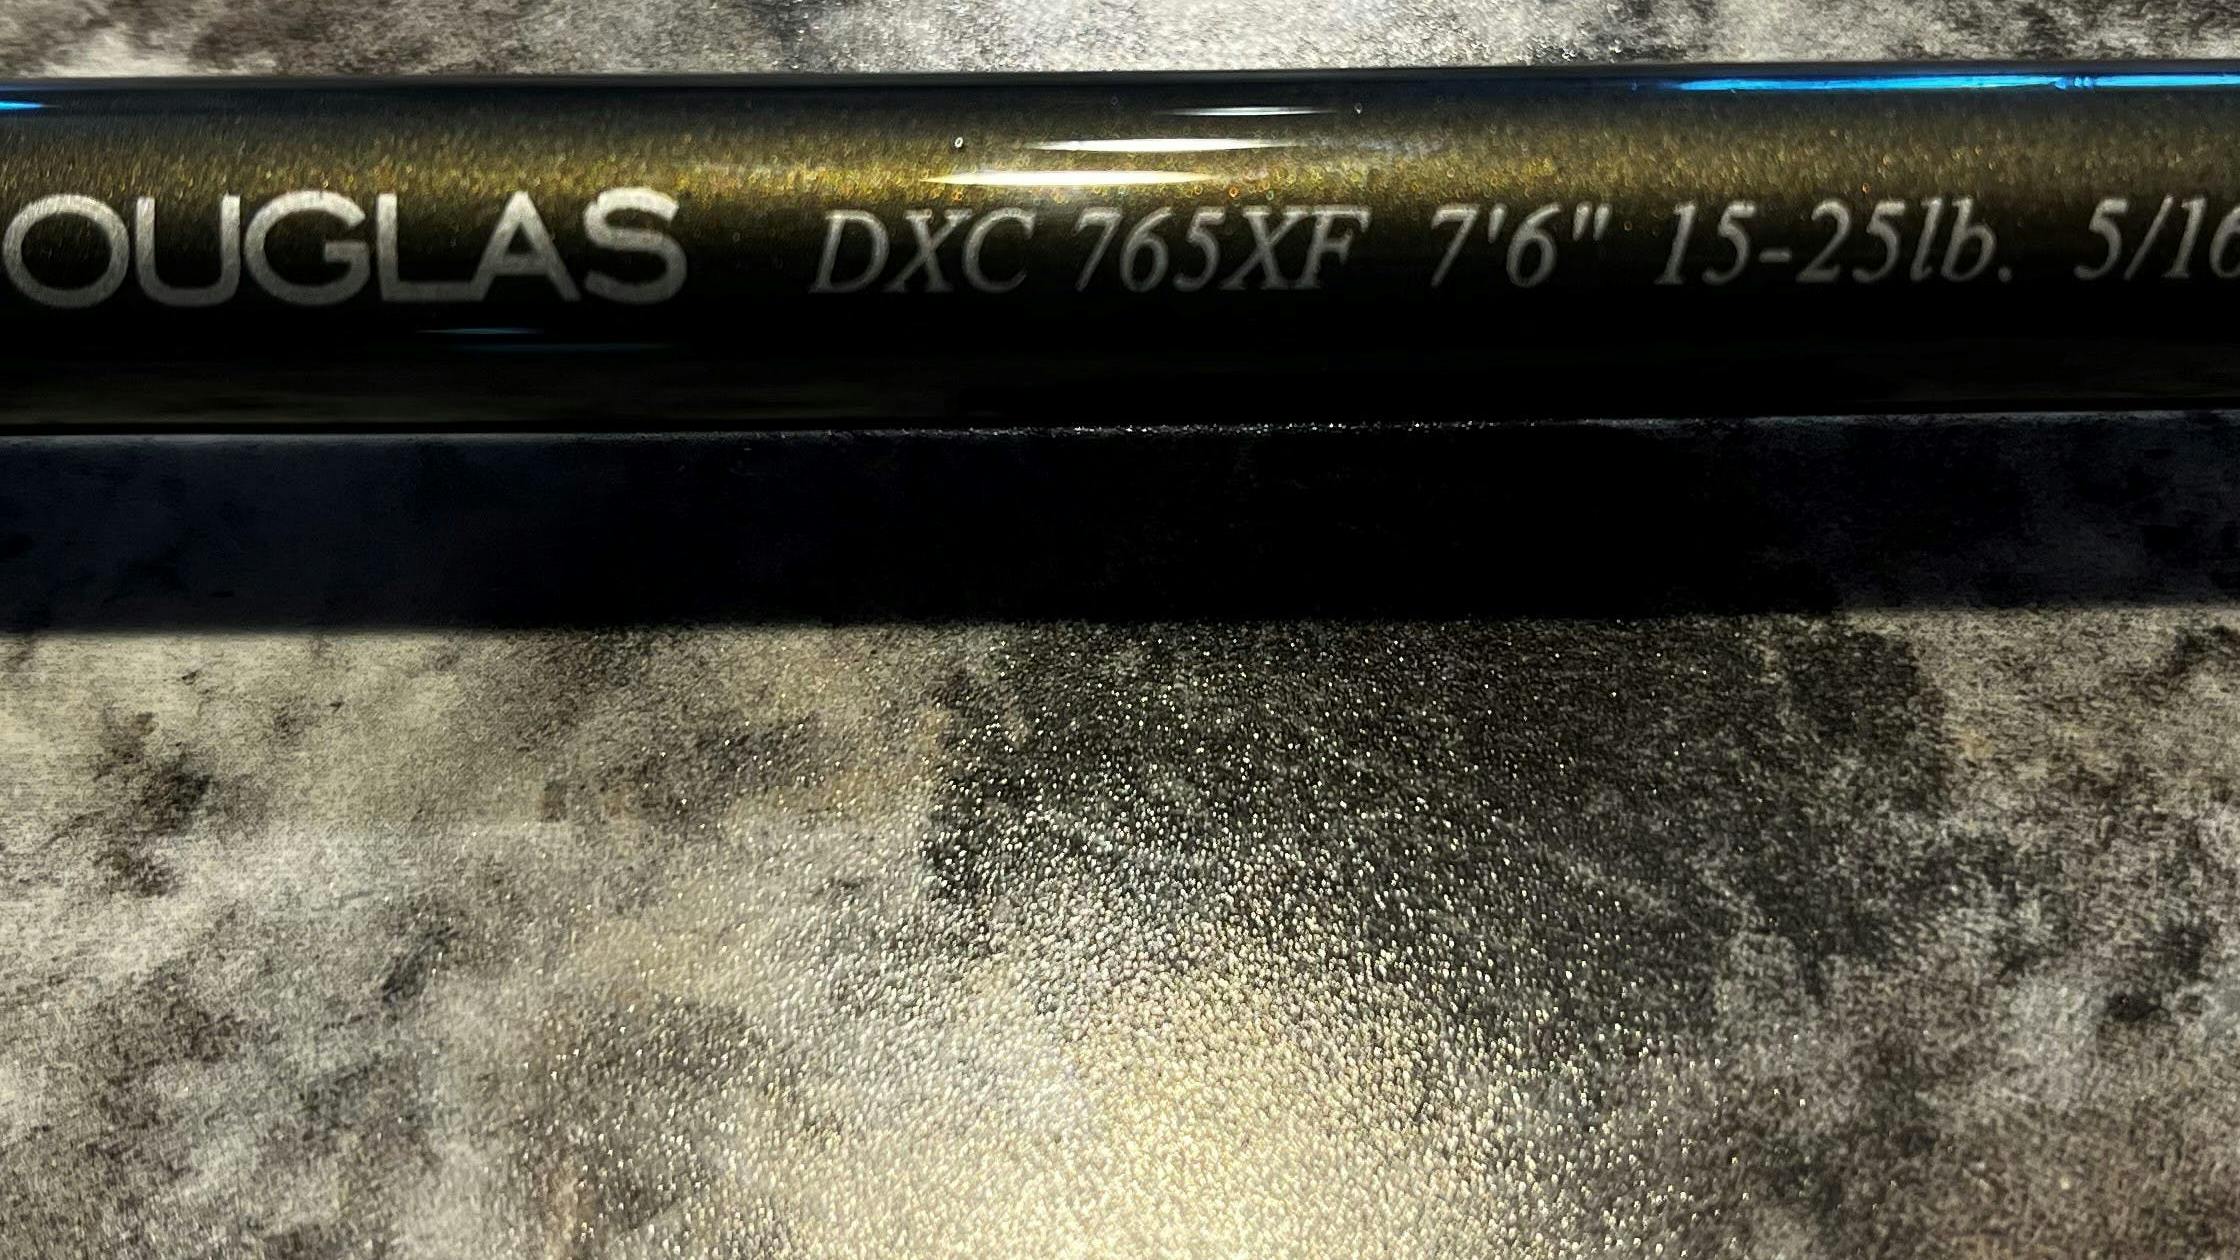 The Douglas DXC Casting Rod. 